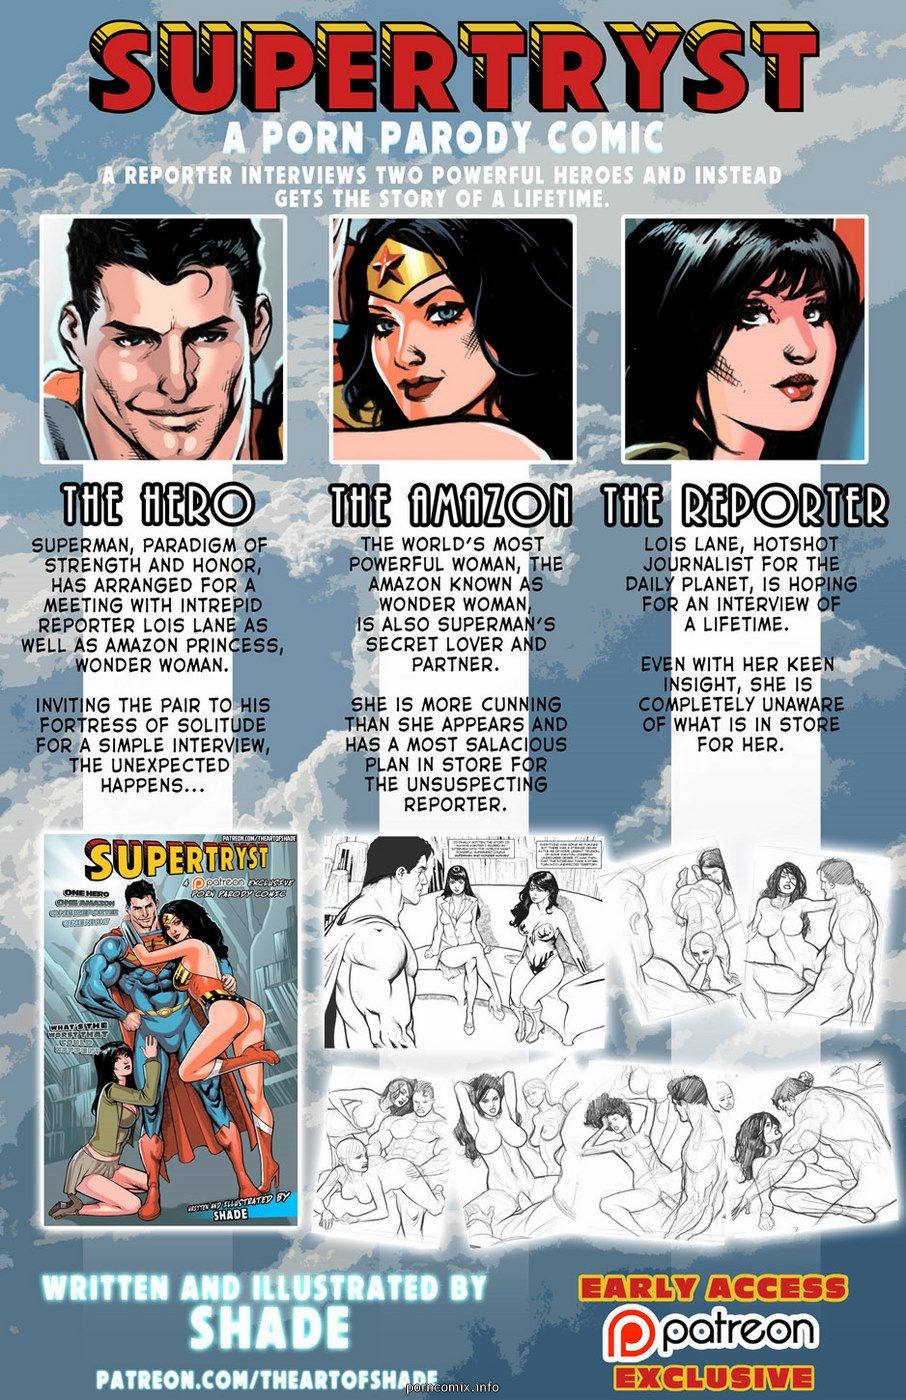 Shade - Supertryst - Superman, WonderWoman page 2